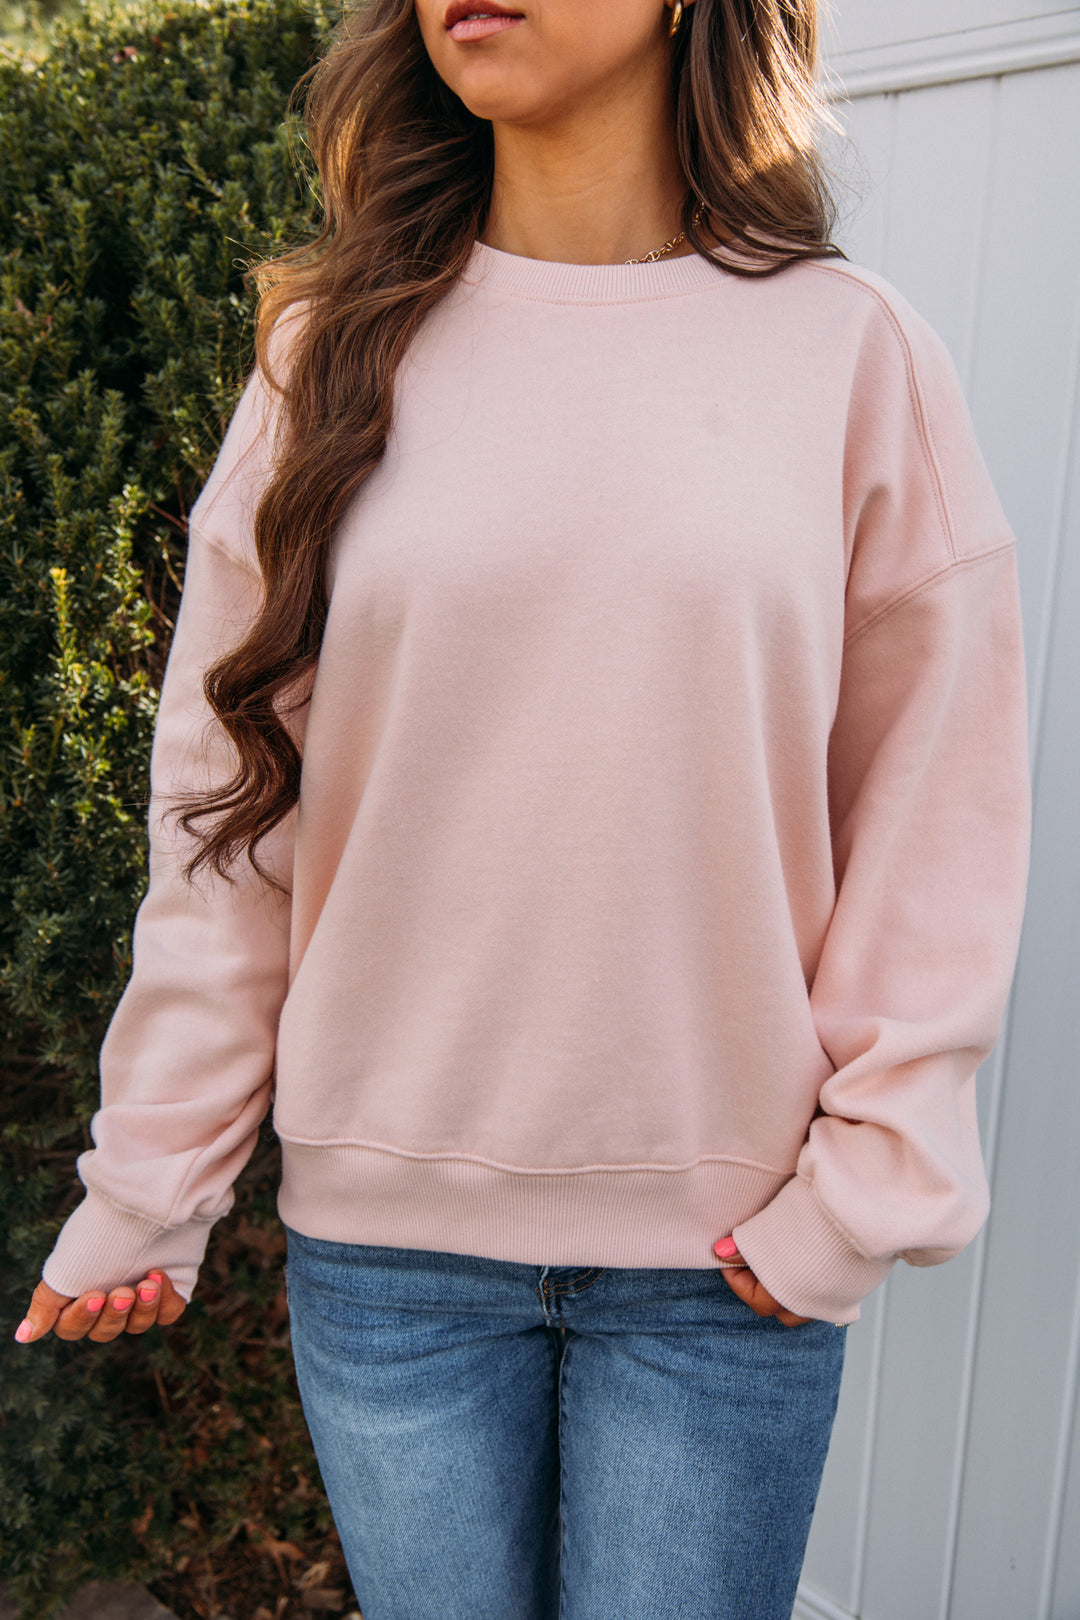 Simply Sweet Sweatshirt - Dusty Pink